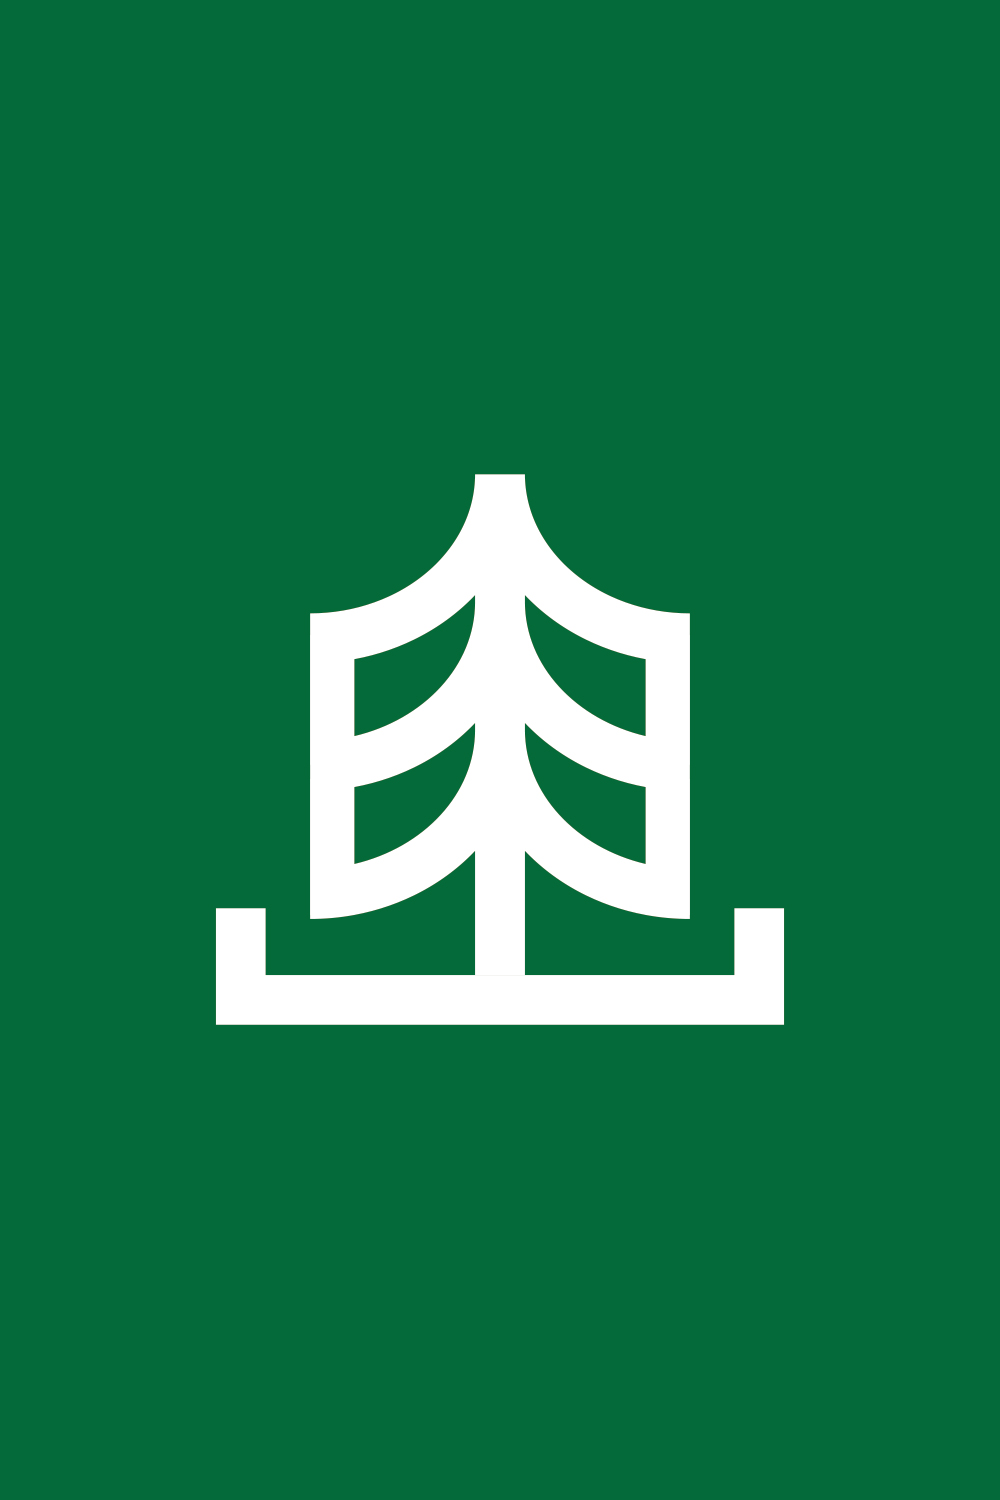 Pine Tree Logo Design Template | Nature Logo pinterest preview image.